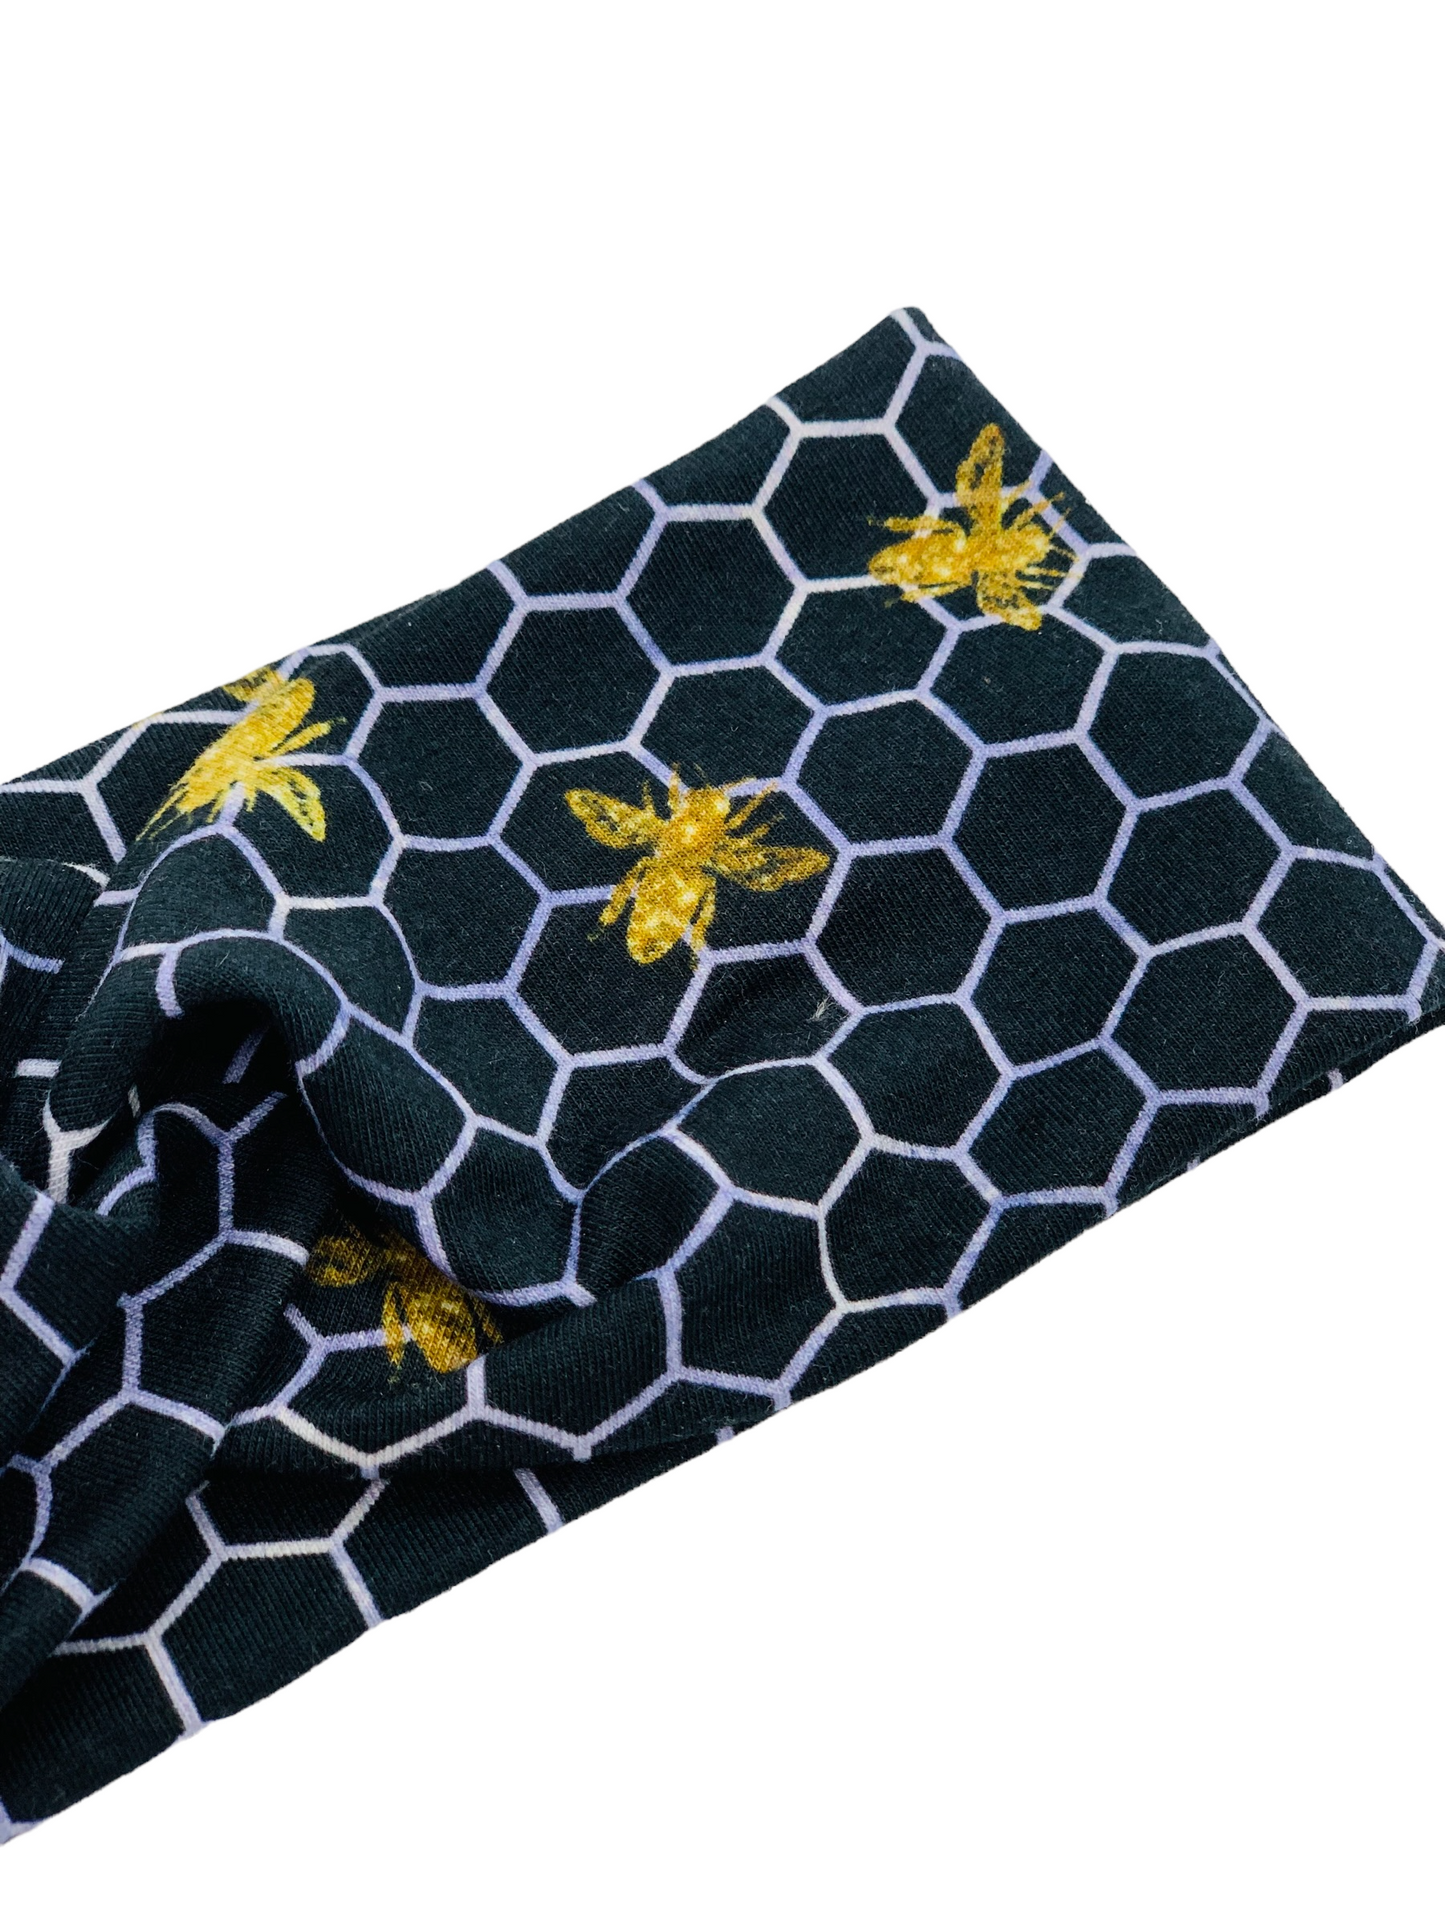 Honeycomb ORGANIC Headband-Twist or Yoga | Sweet Stitch Novelties